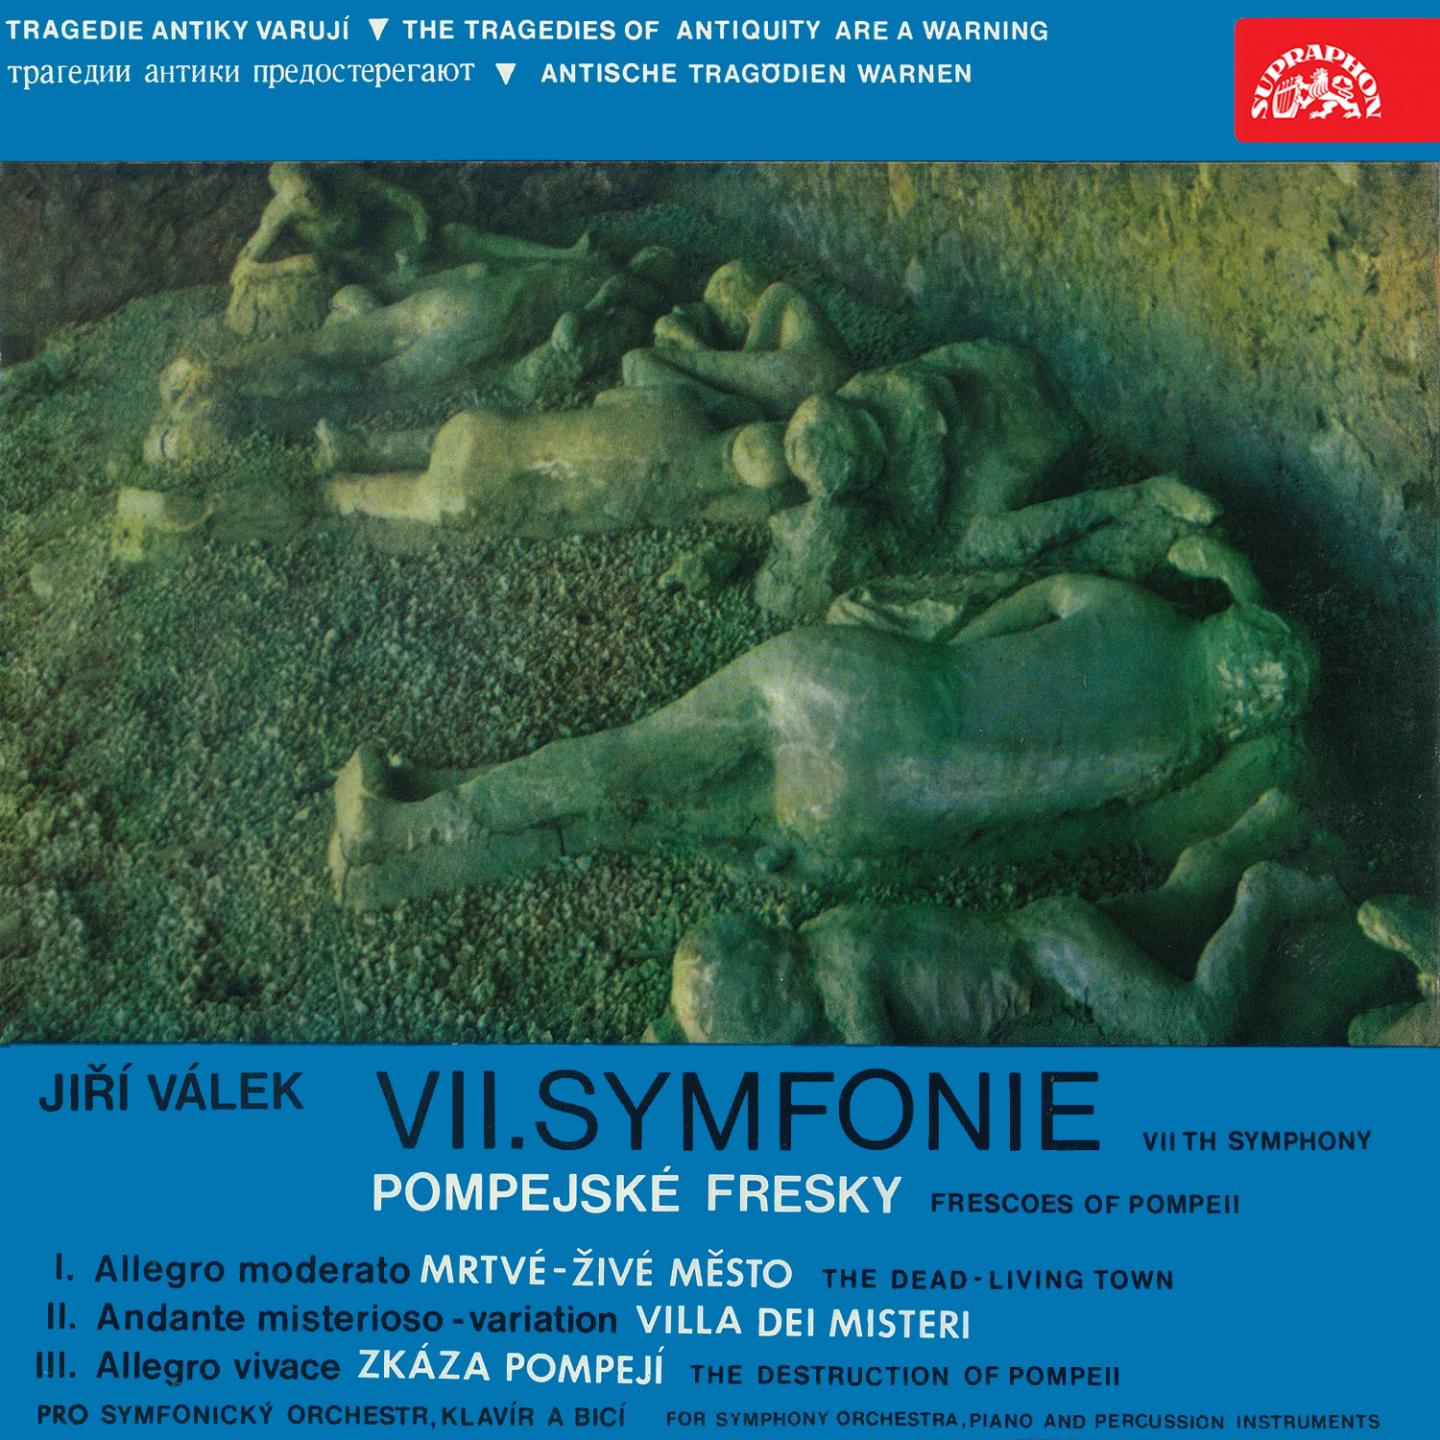 Symphony No. 7 "Pompeian Frescoes": III. Allegro vivace